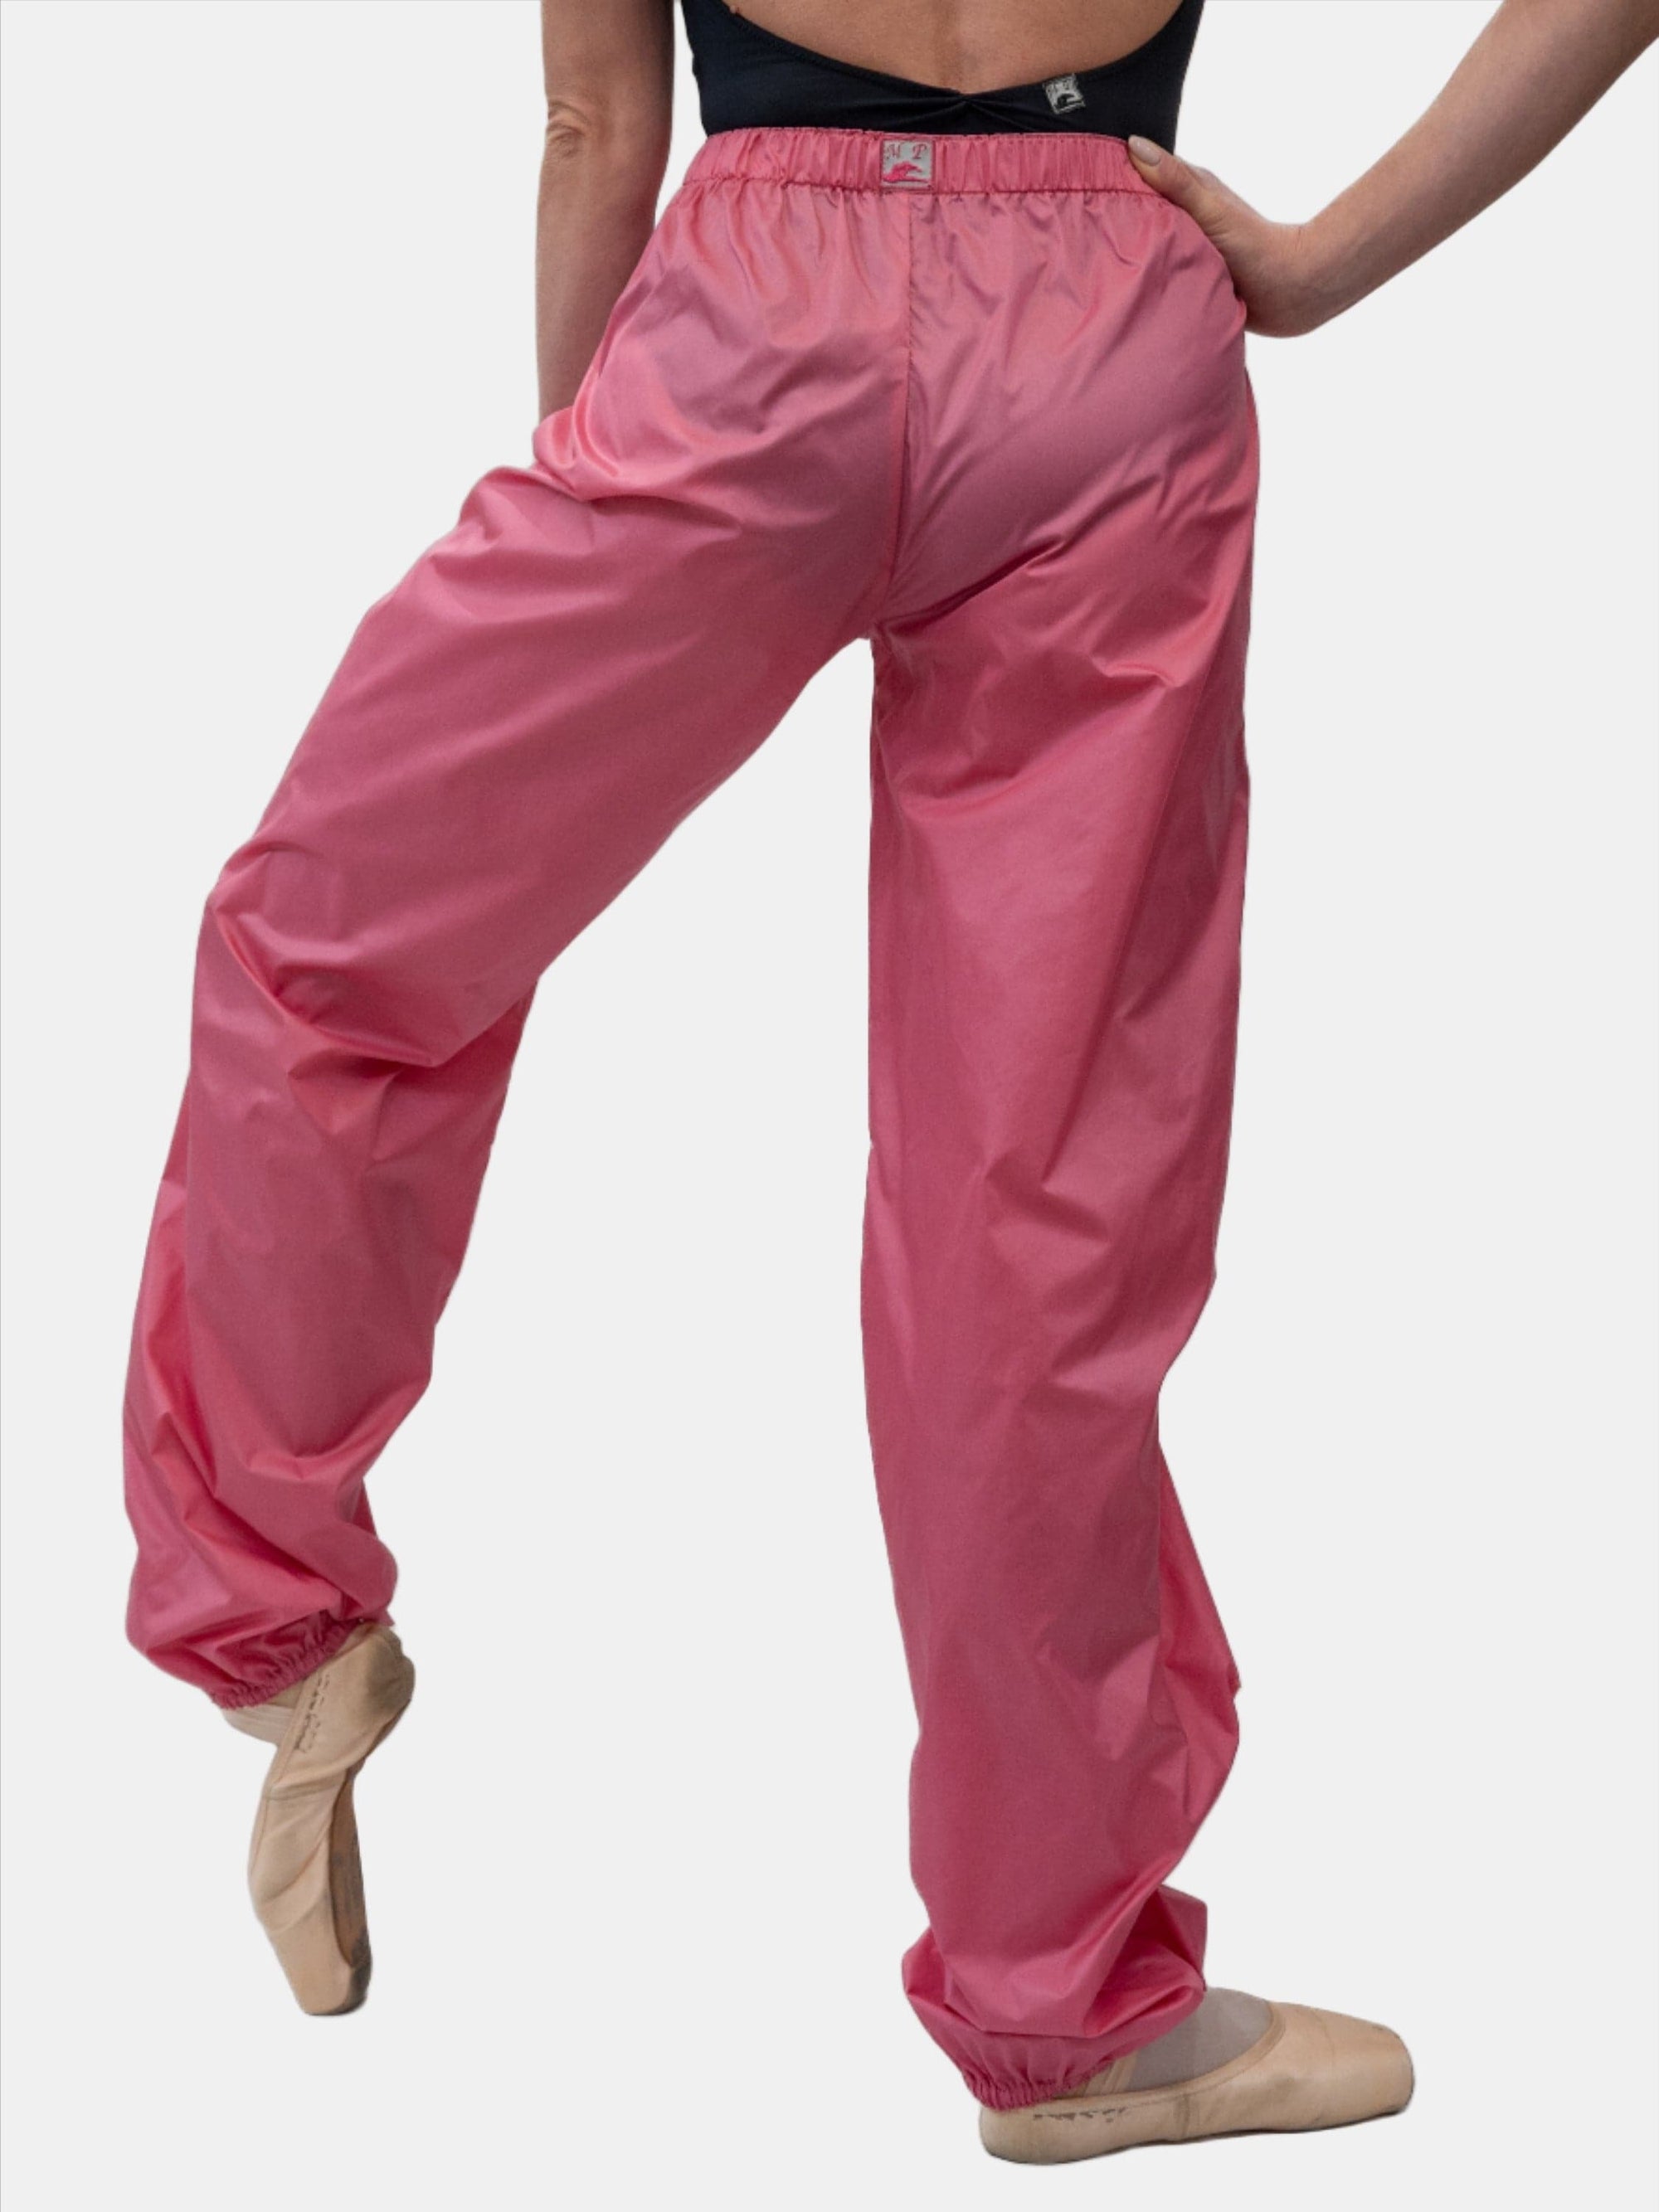 Brink Pink Dance Trash Bag Pants MP5003 - Atelier della Danza MP